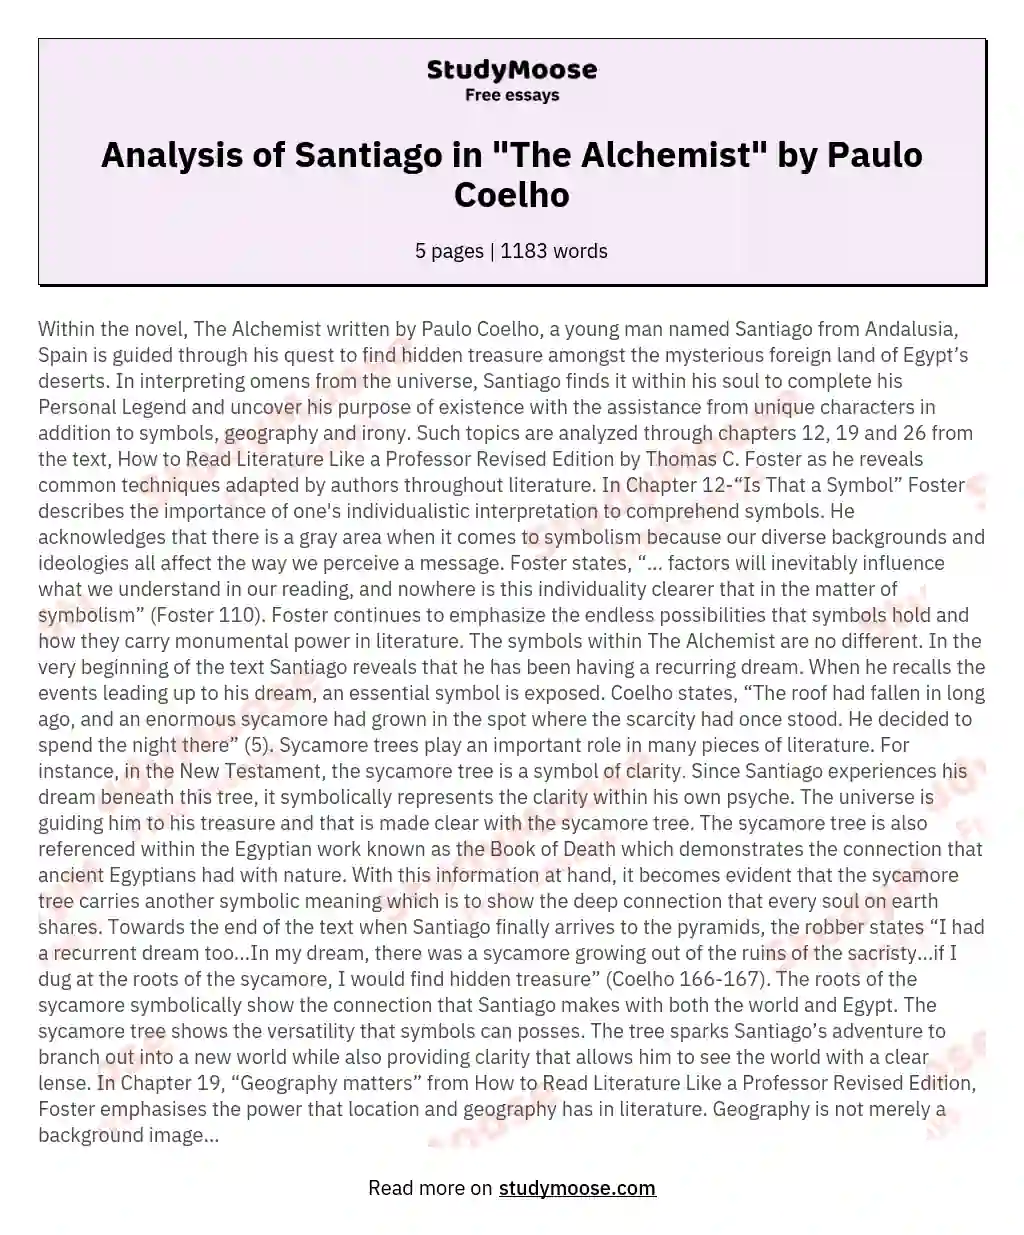 Analysis of Santiago in "The Alchemist" by Paulo Coelho